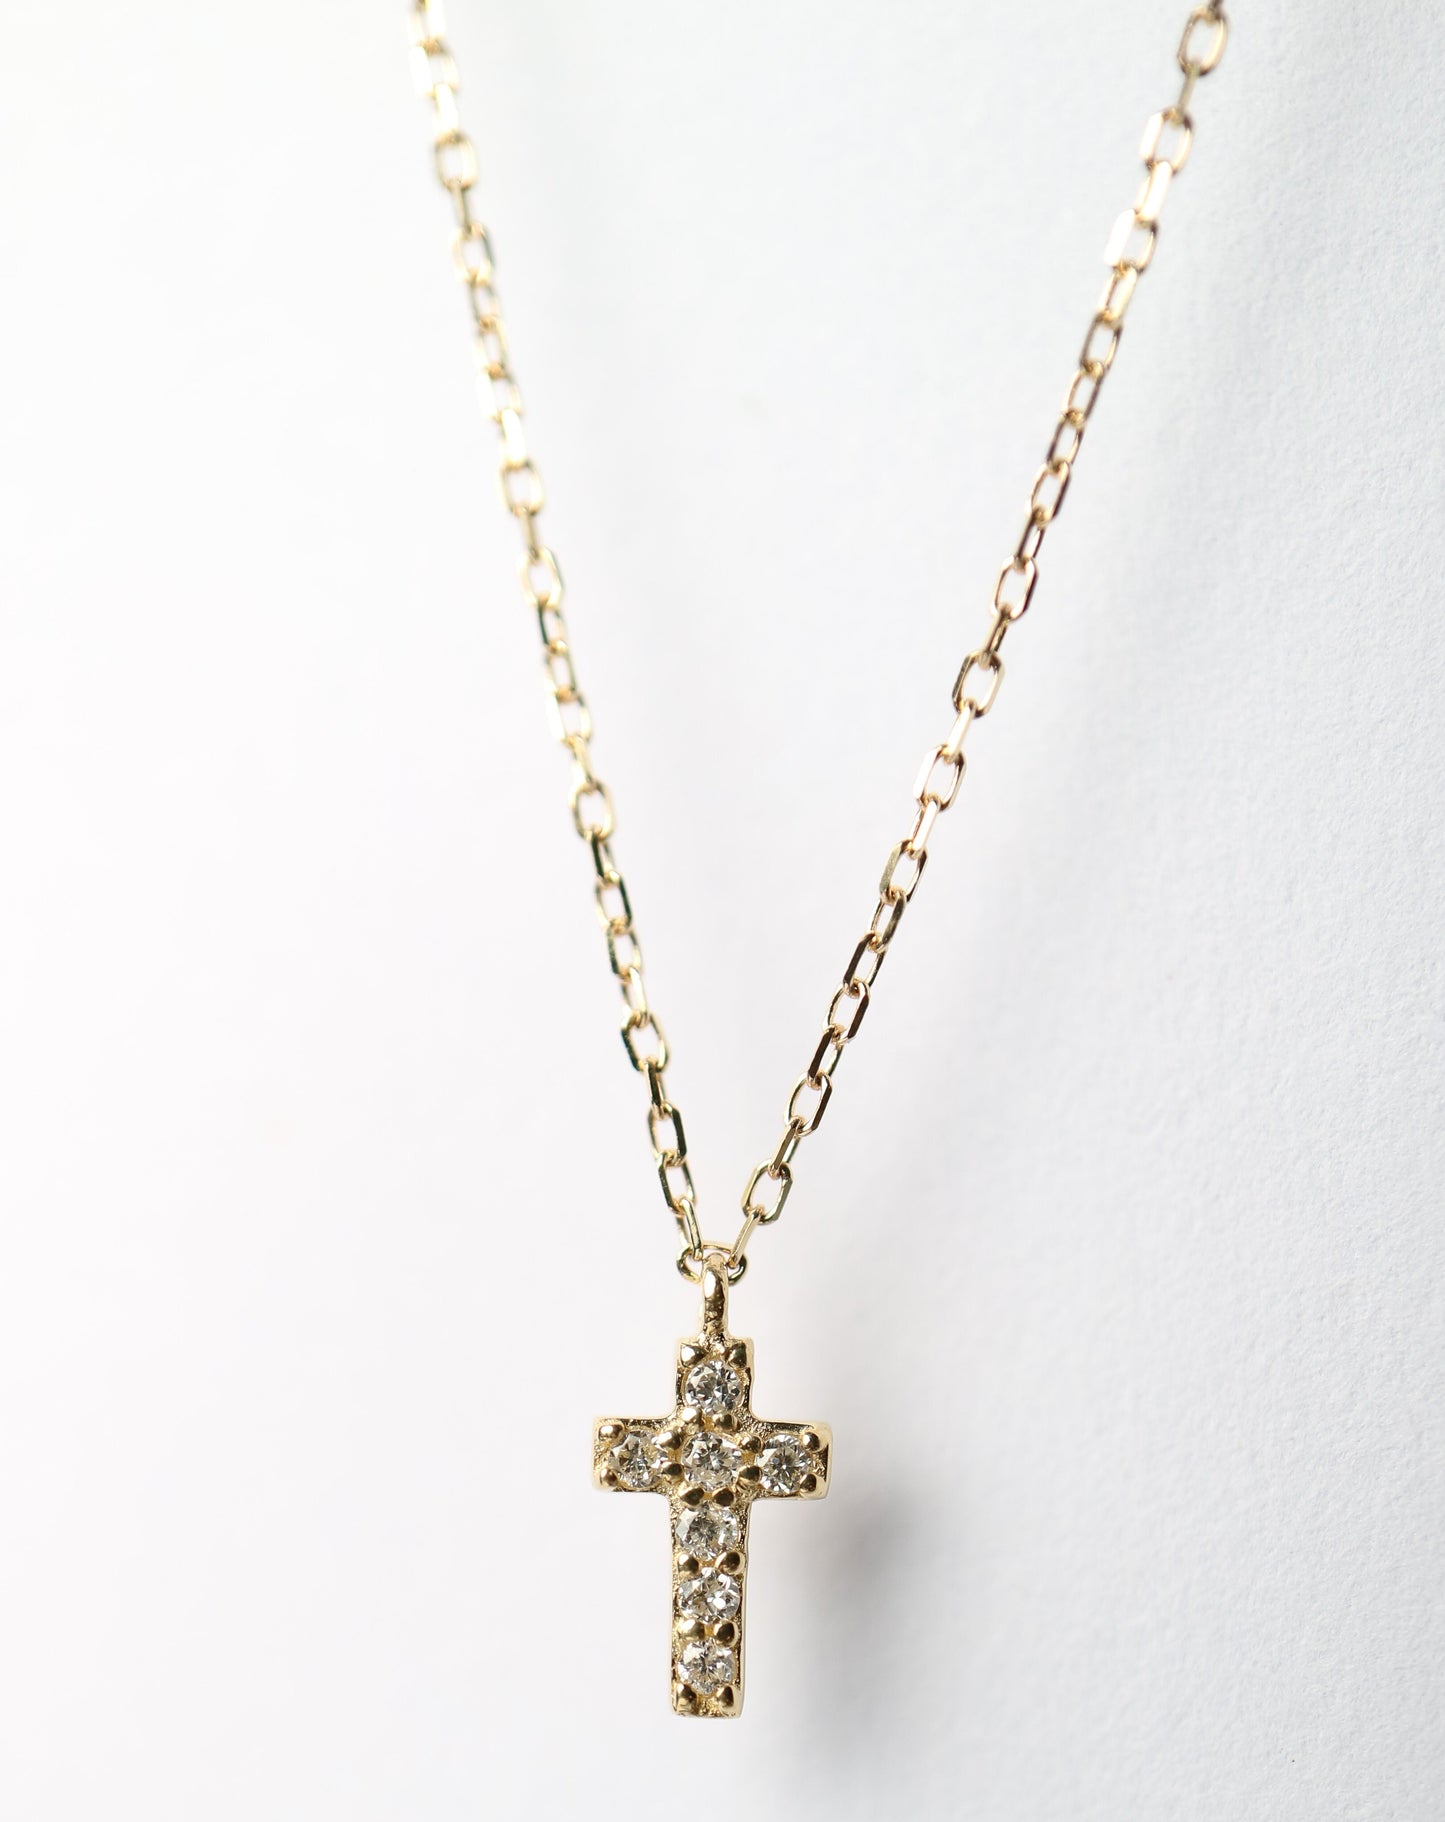 9kt Gold and Diamond Crucifix Pendant